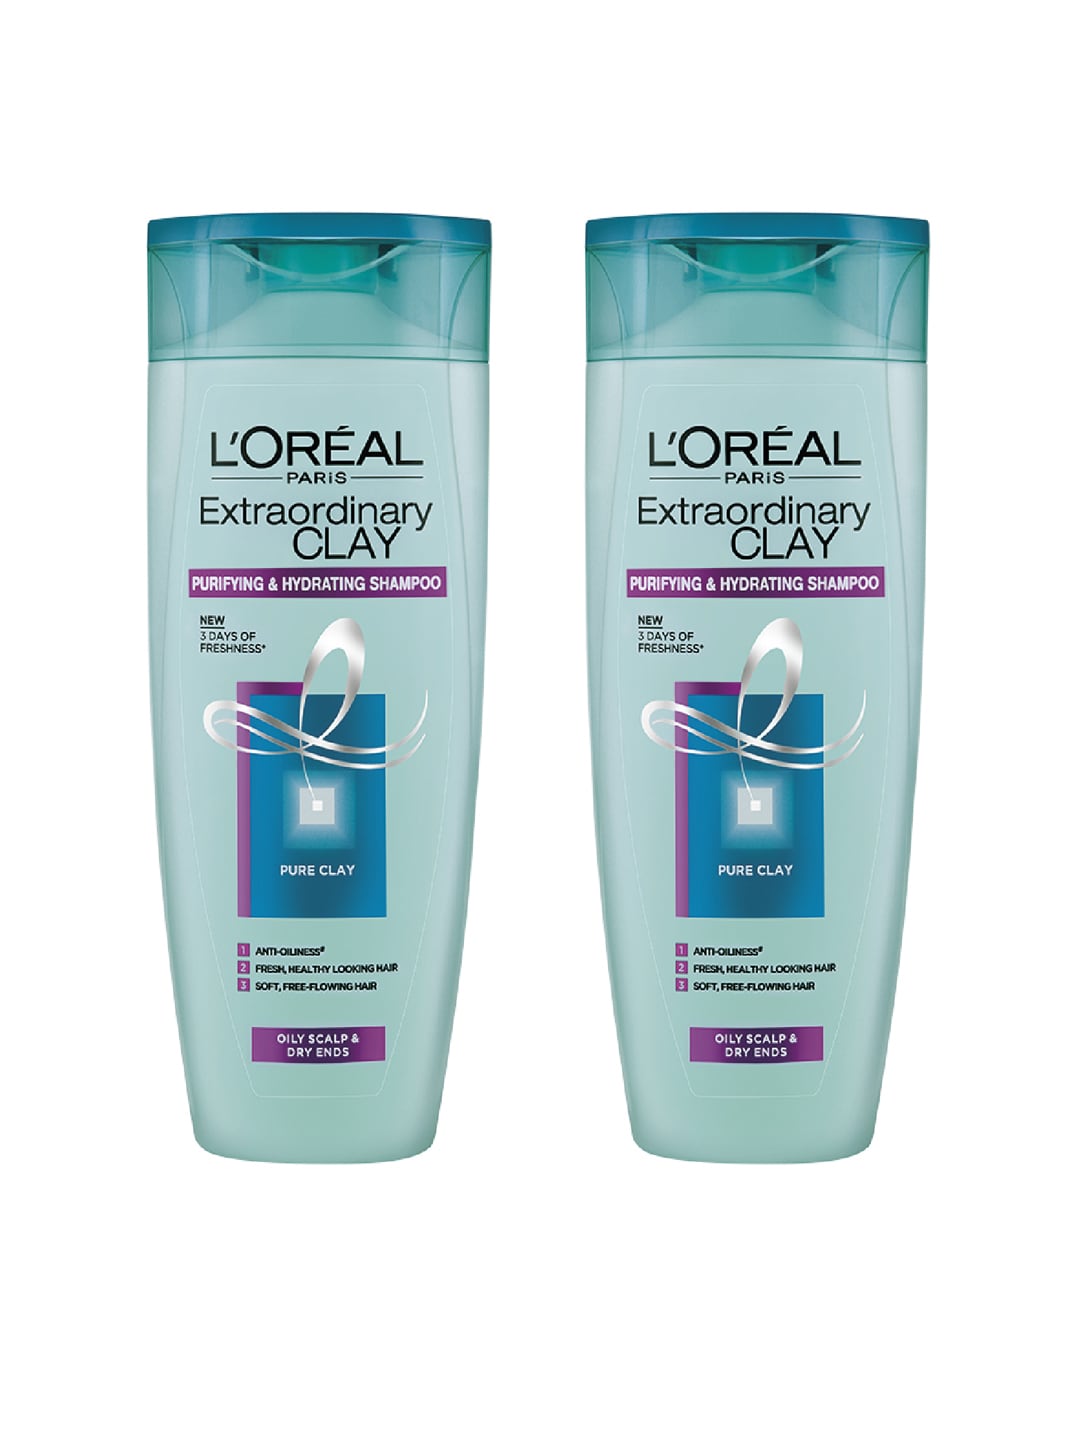 L'Oreal Paris Set Of 2 Unisex Extraordinary Clay Shampoo 175 ml each Price in India